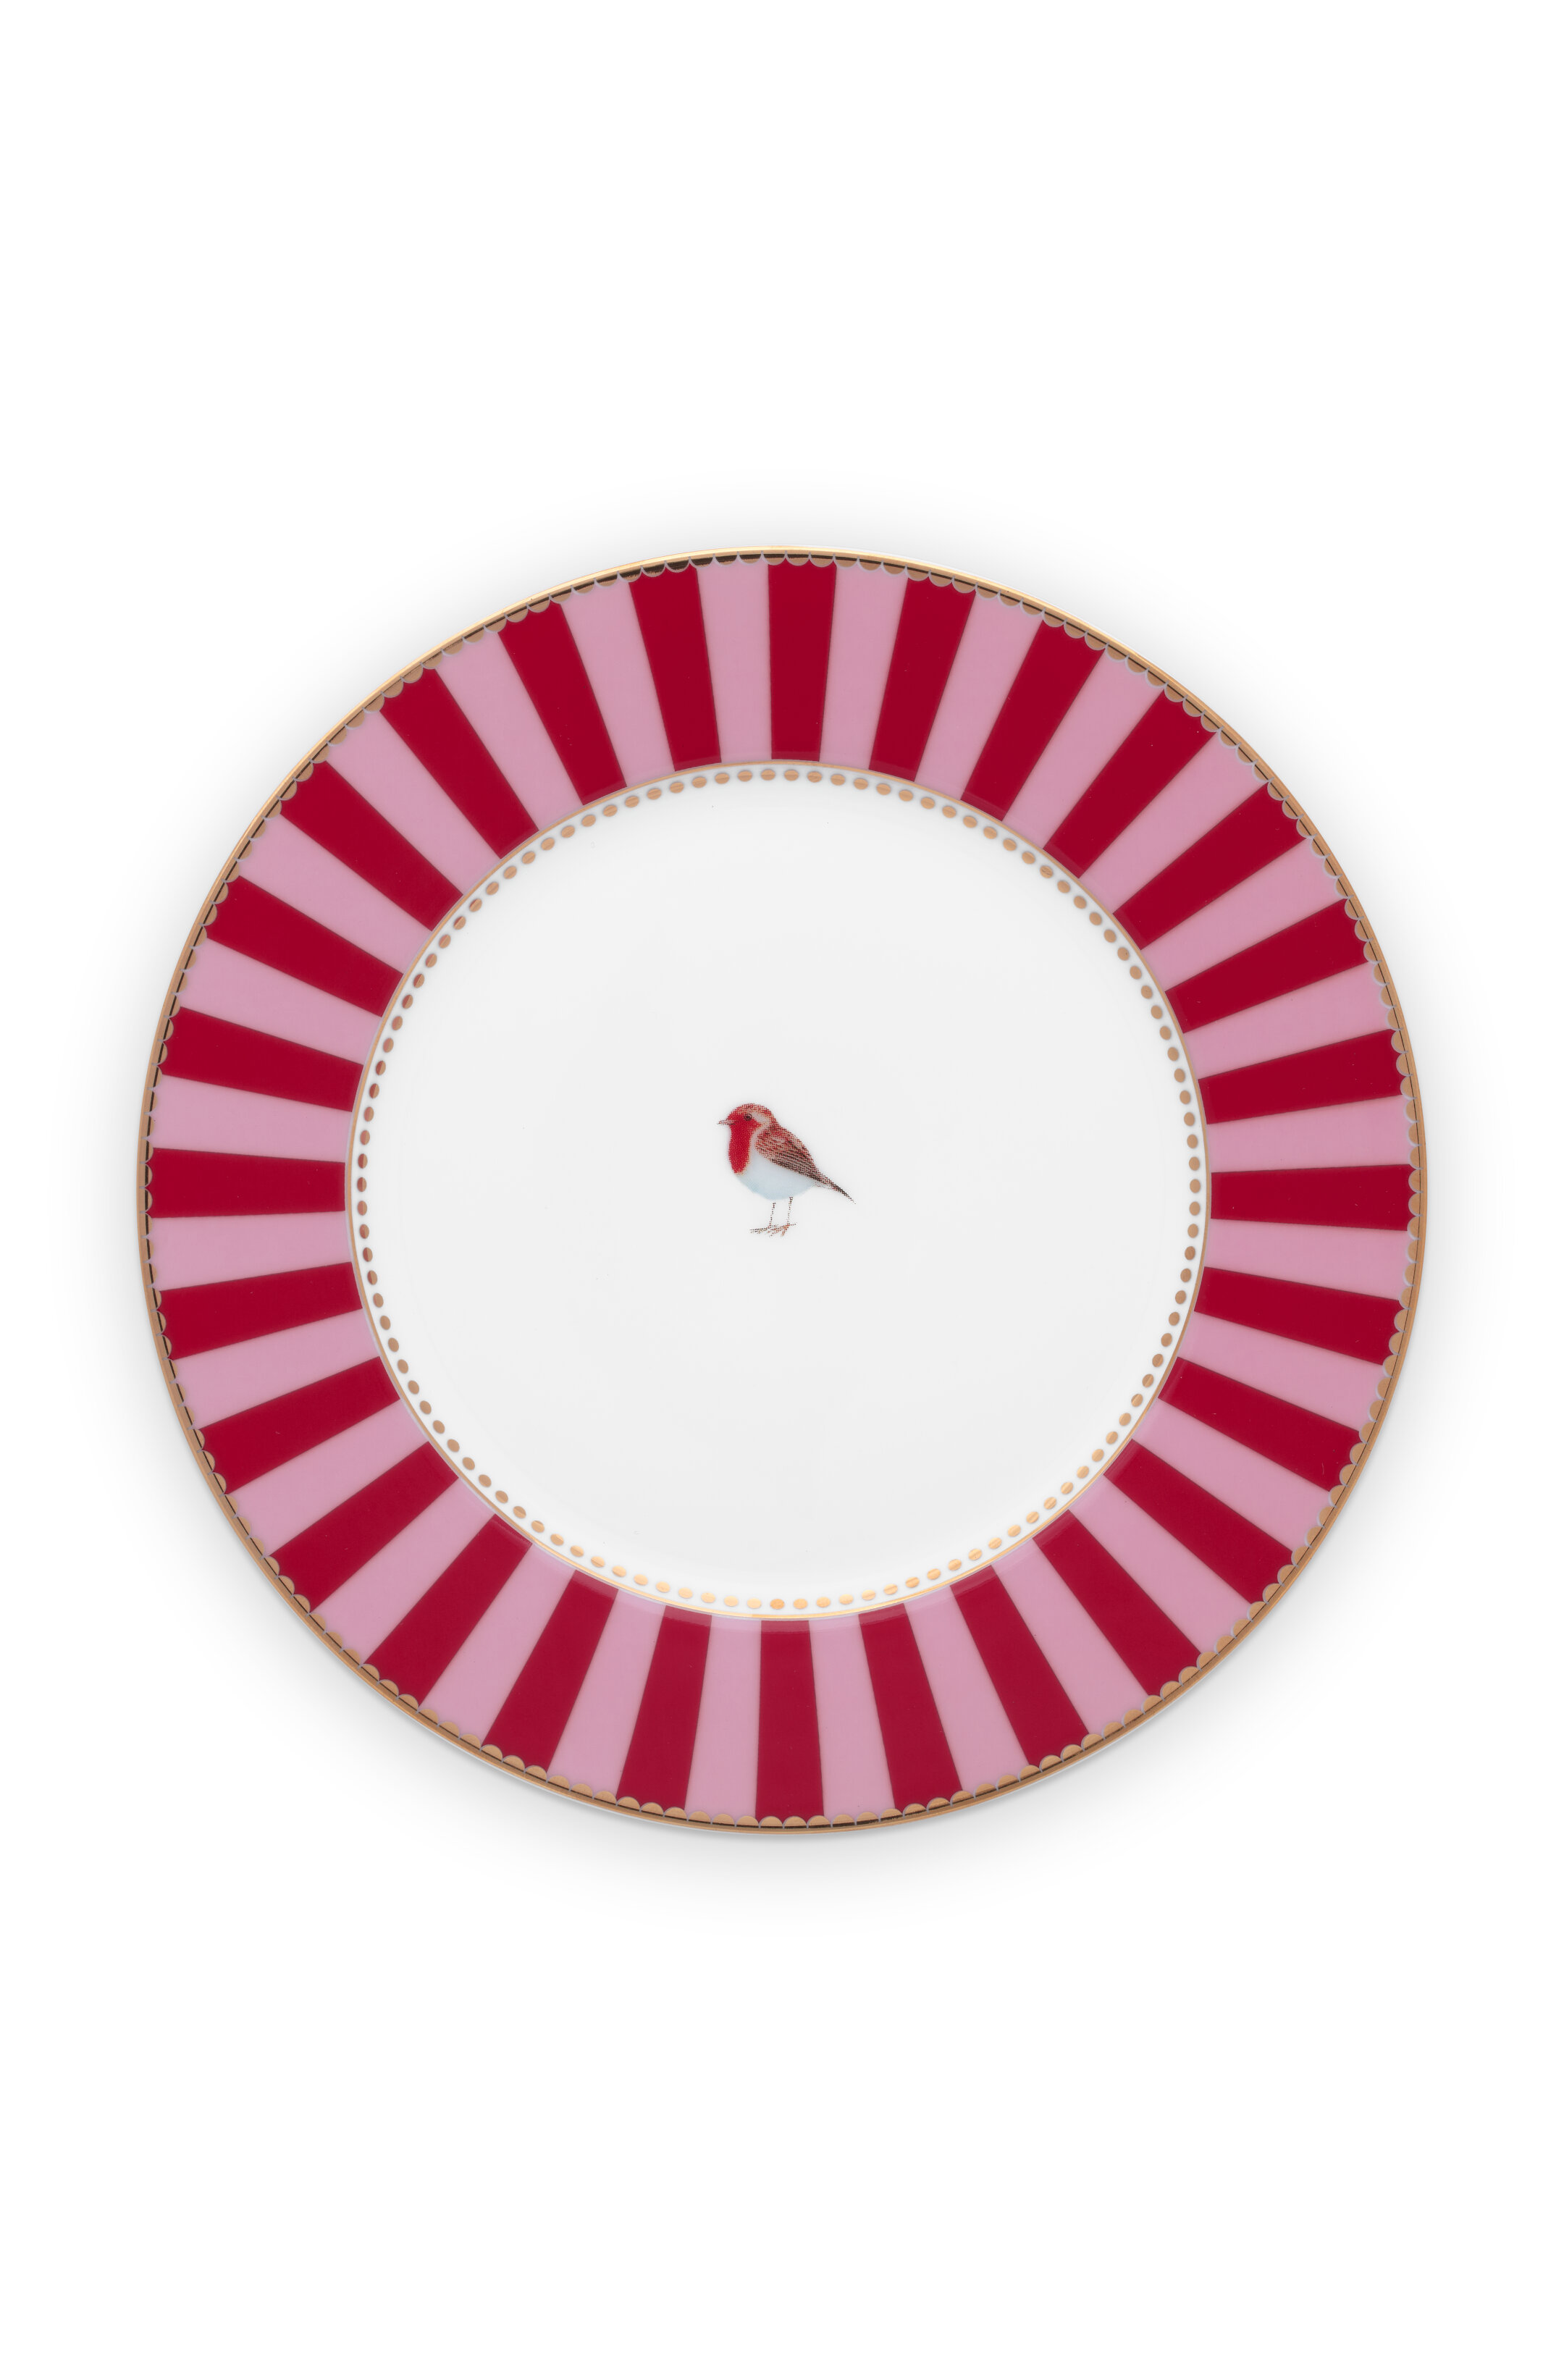 Pip Studio Love Birds Teller Stripes Red-Pink (17cm)